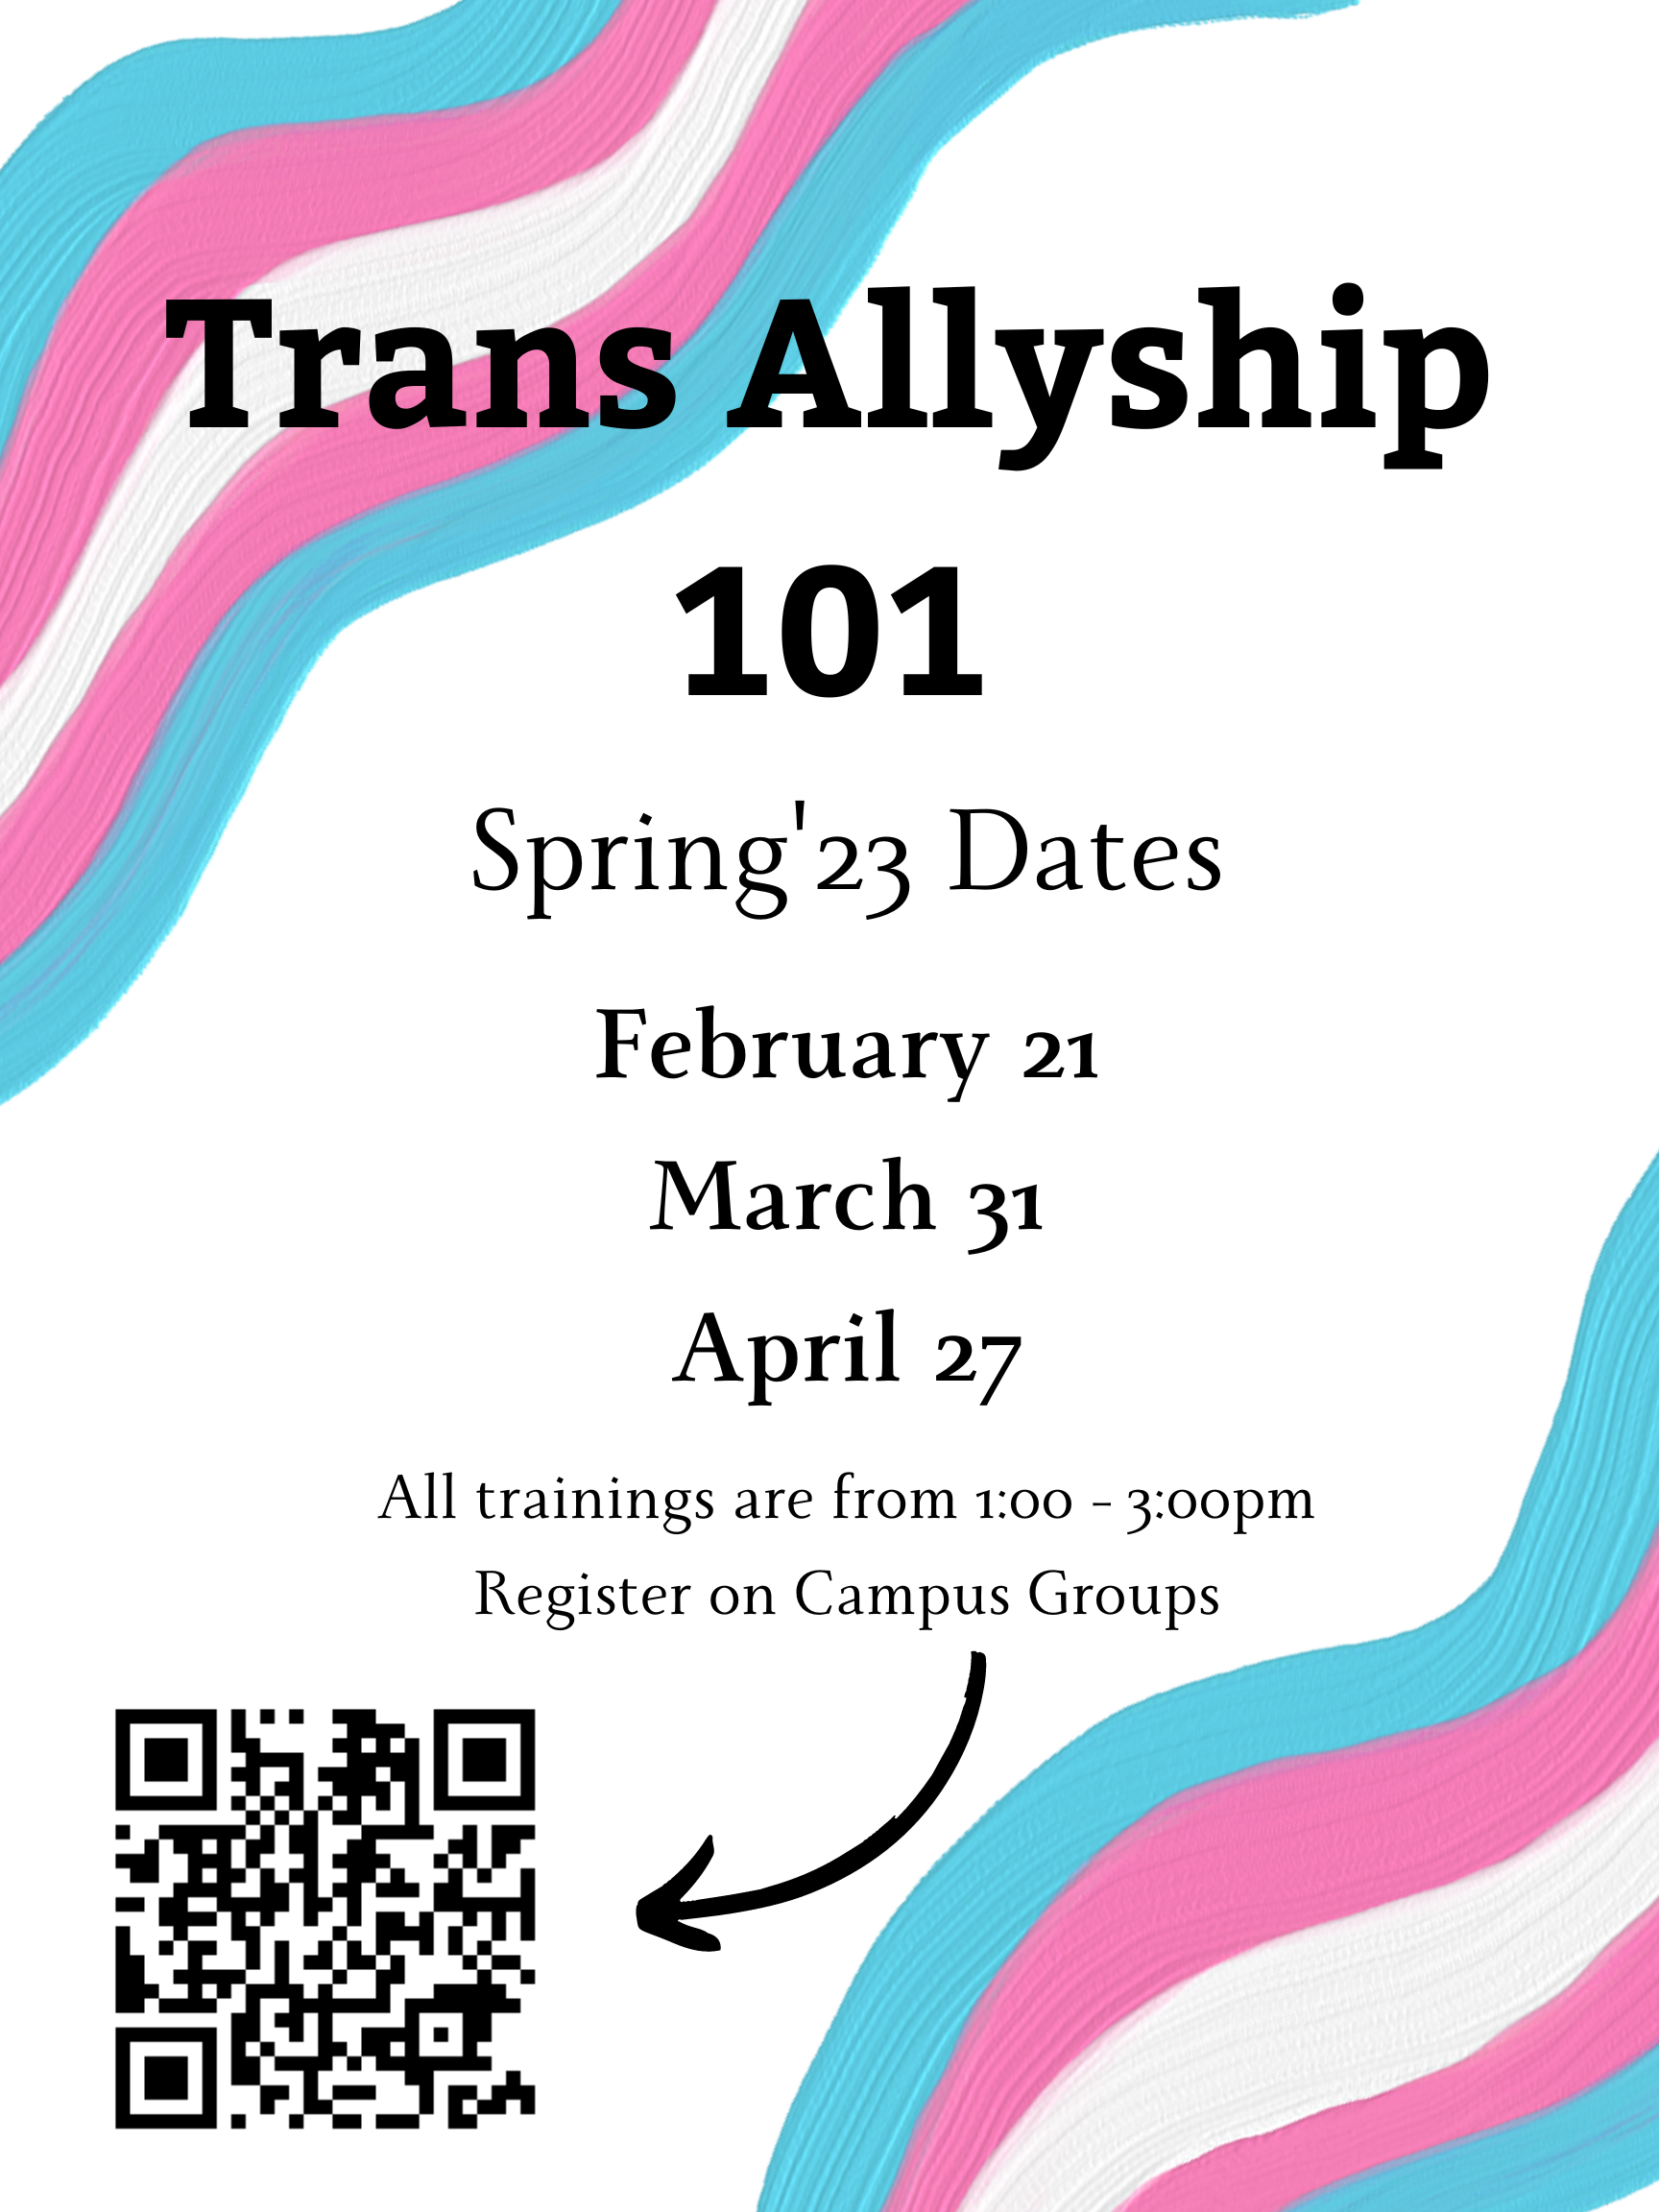 Trans Allyship 101 Spring 23 dates